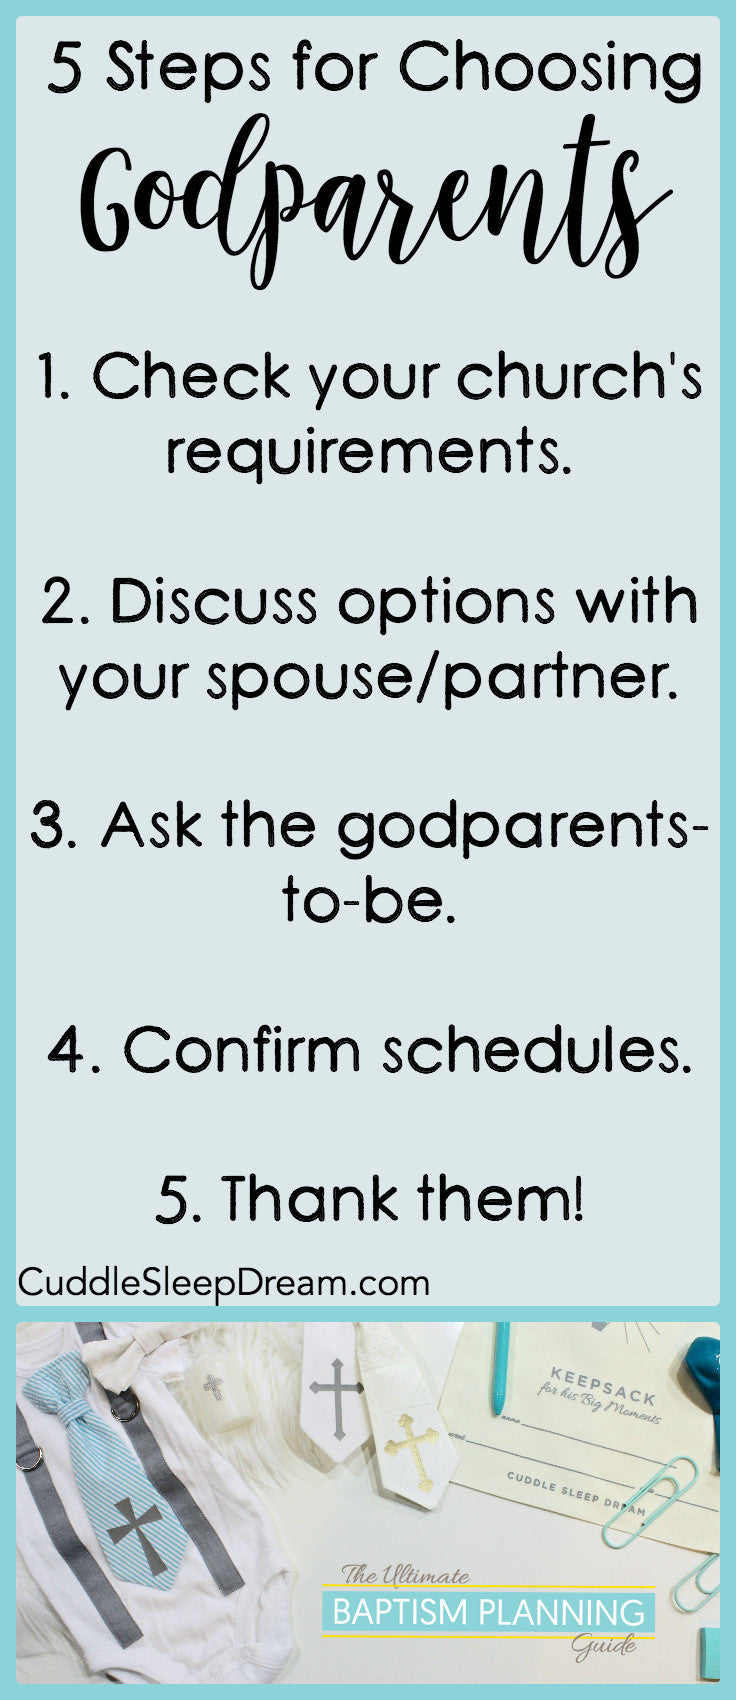 5 steps for choosing godparents